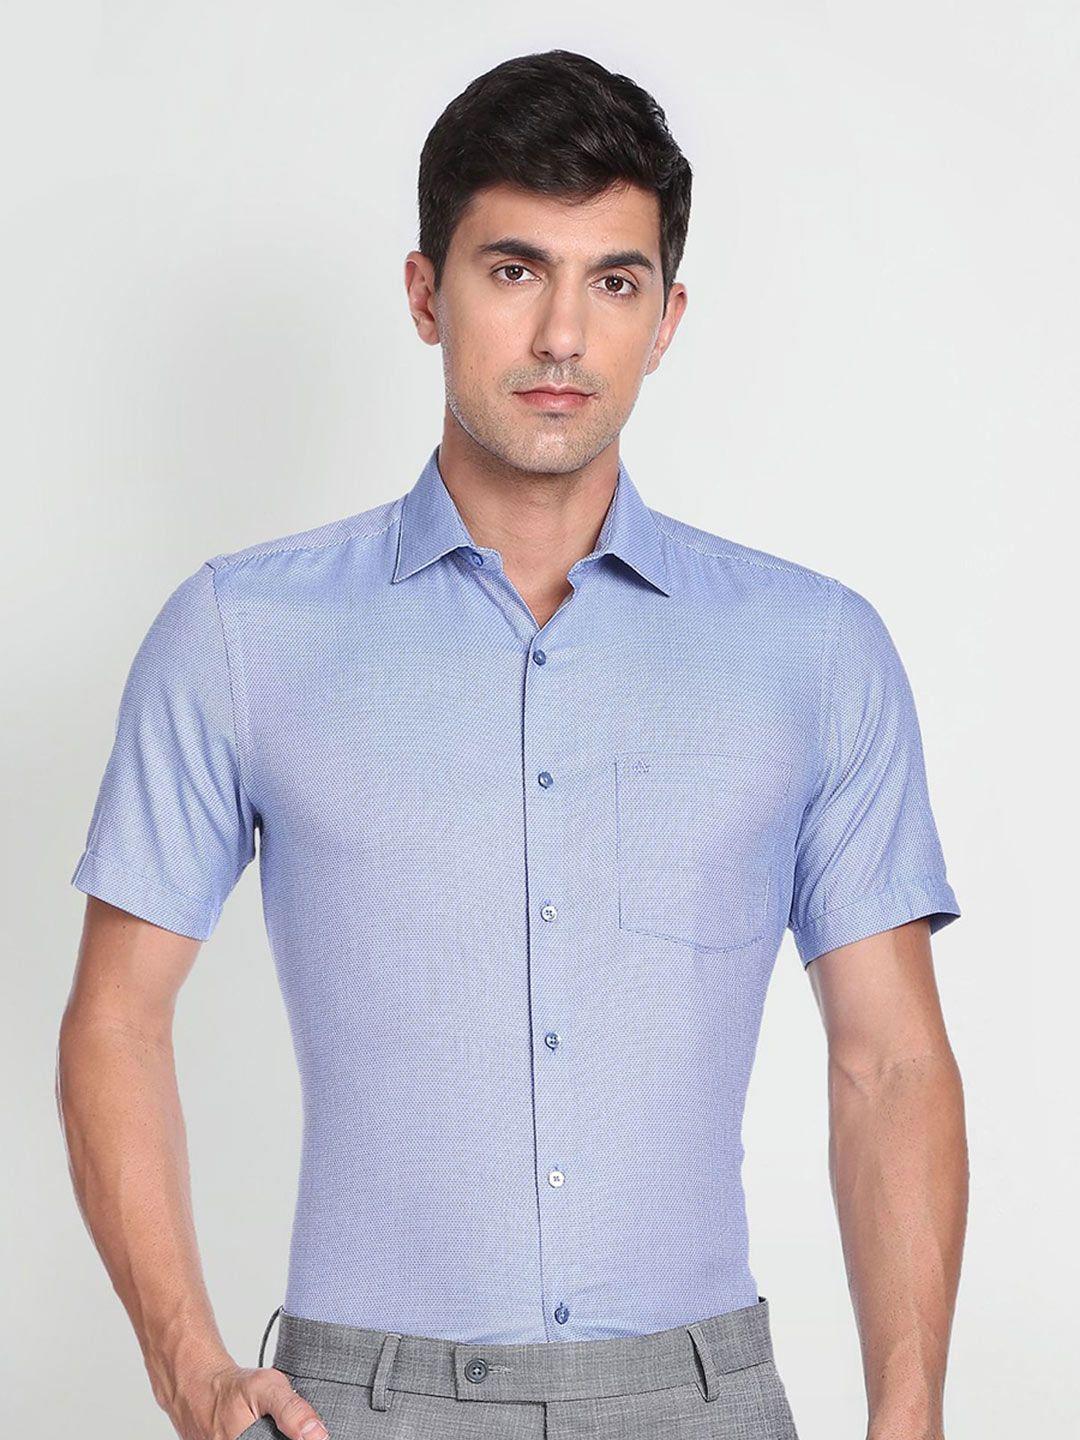 arrow chest pocket short sleeves formal cotton shirt